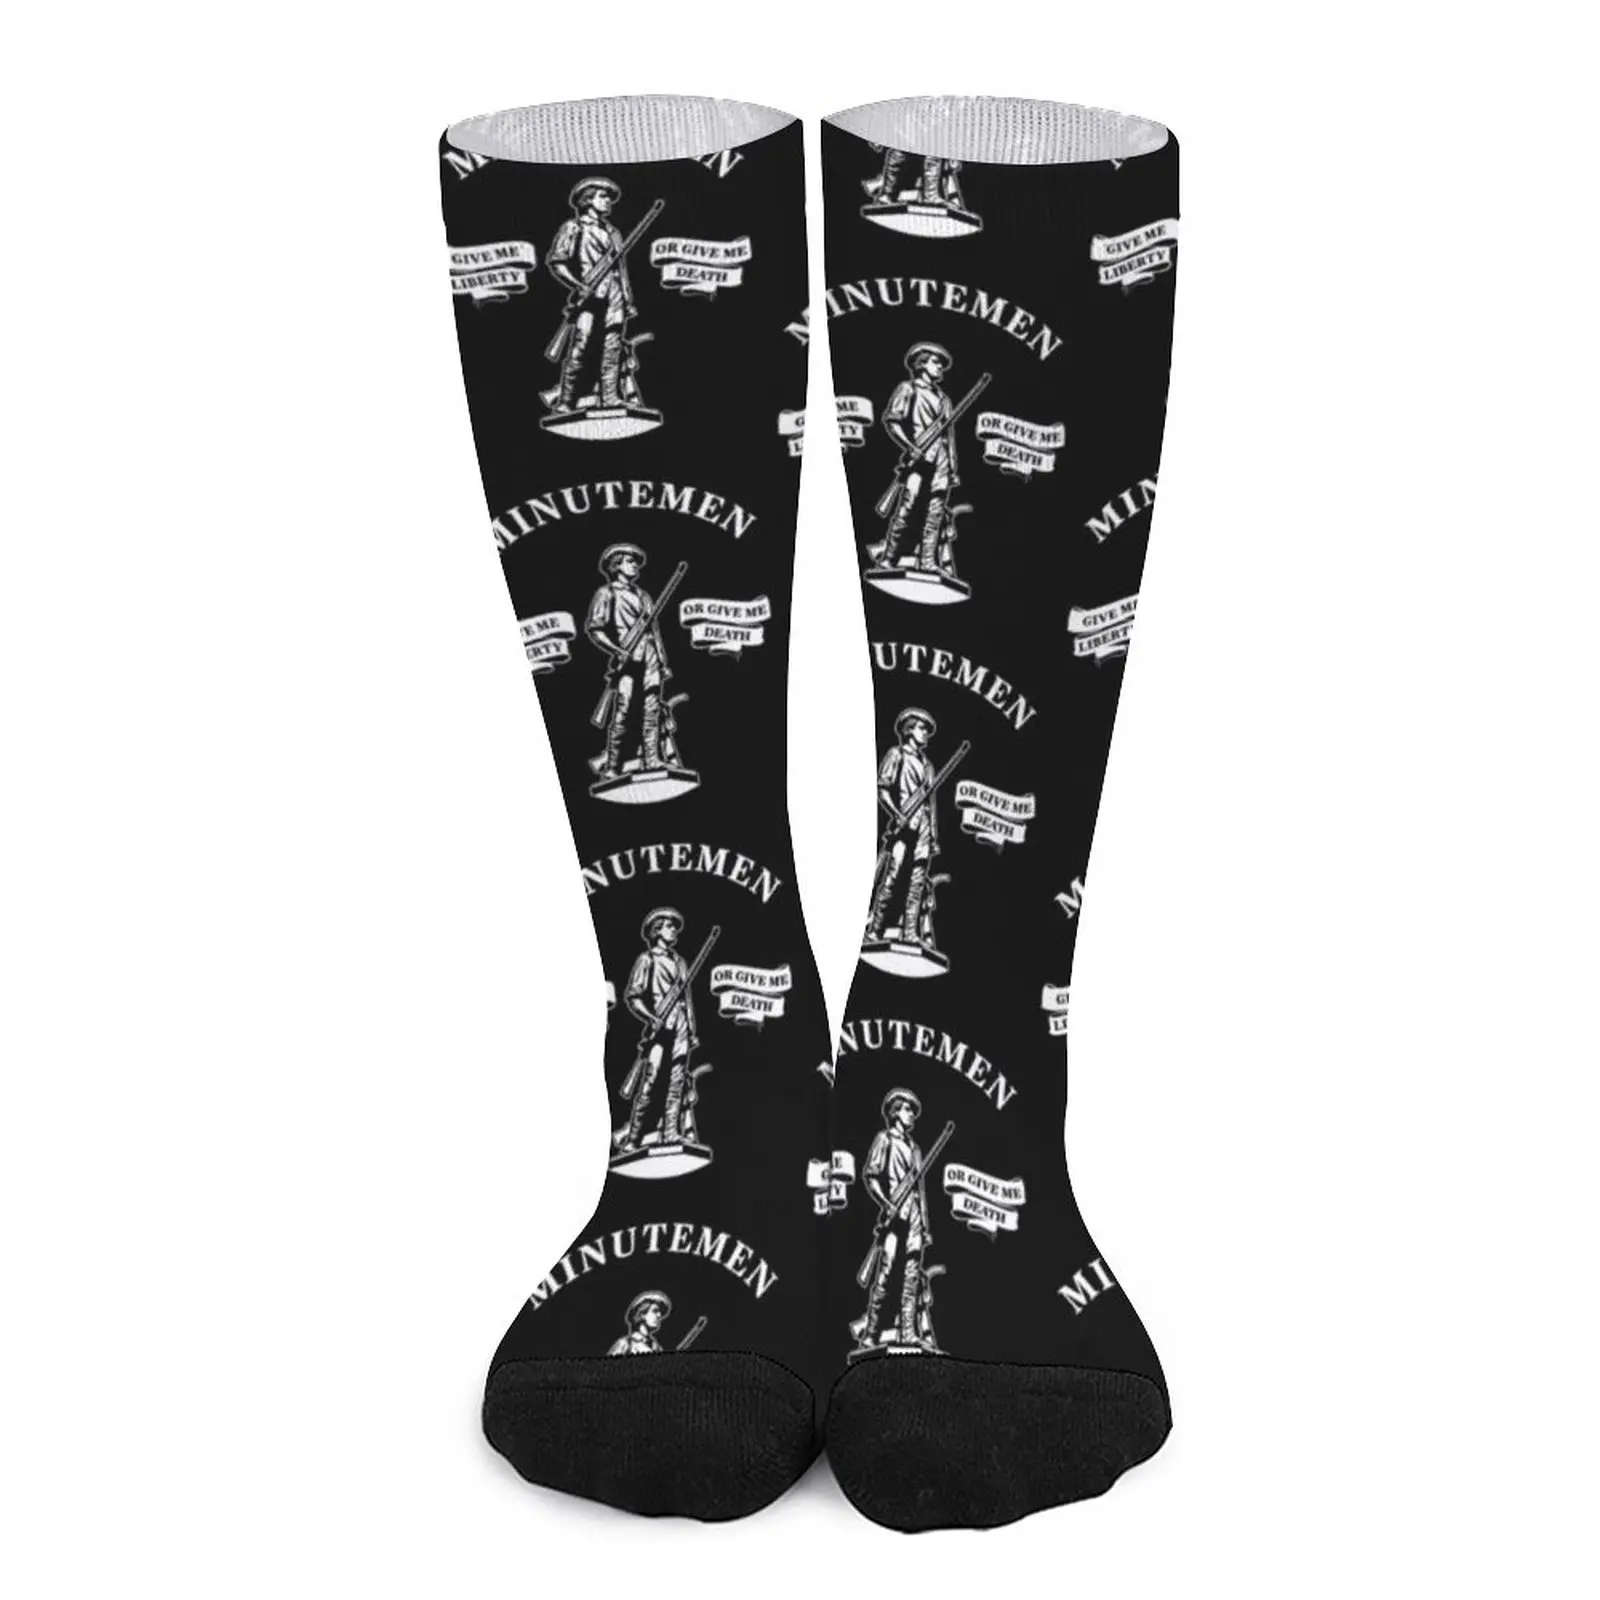 Minutemen 4th of July 1776 USA America Socks Fun socks socks designer brand Stockings man valentine gift ideas